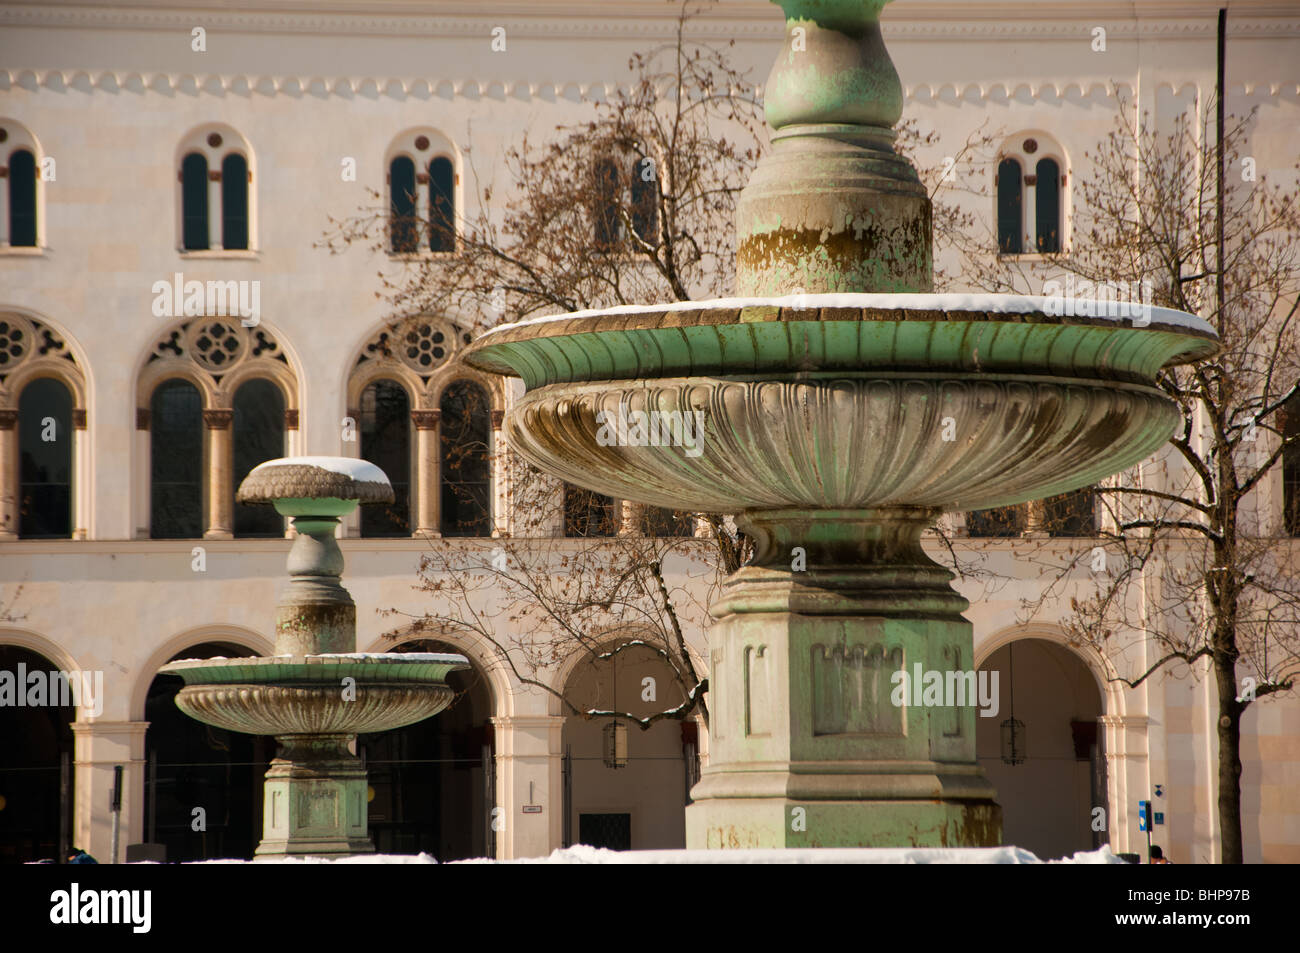 Ludwig Maximilian University Fountains in Munich, Germany. Stock Photo